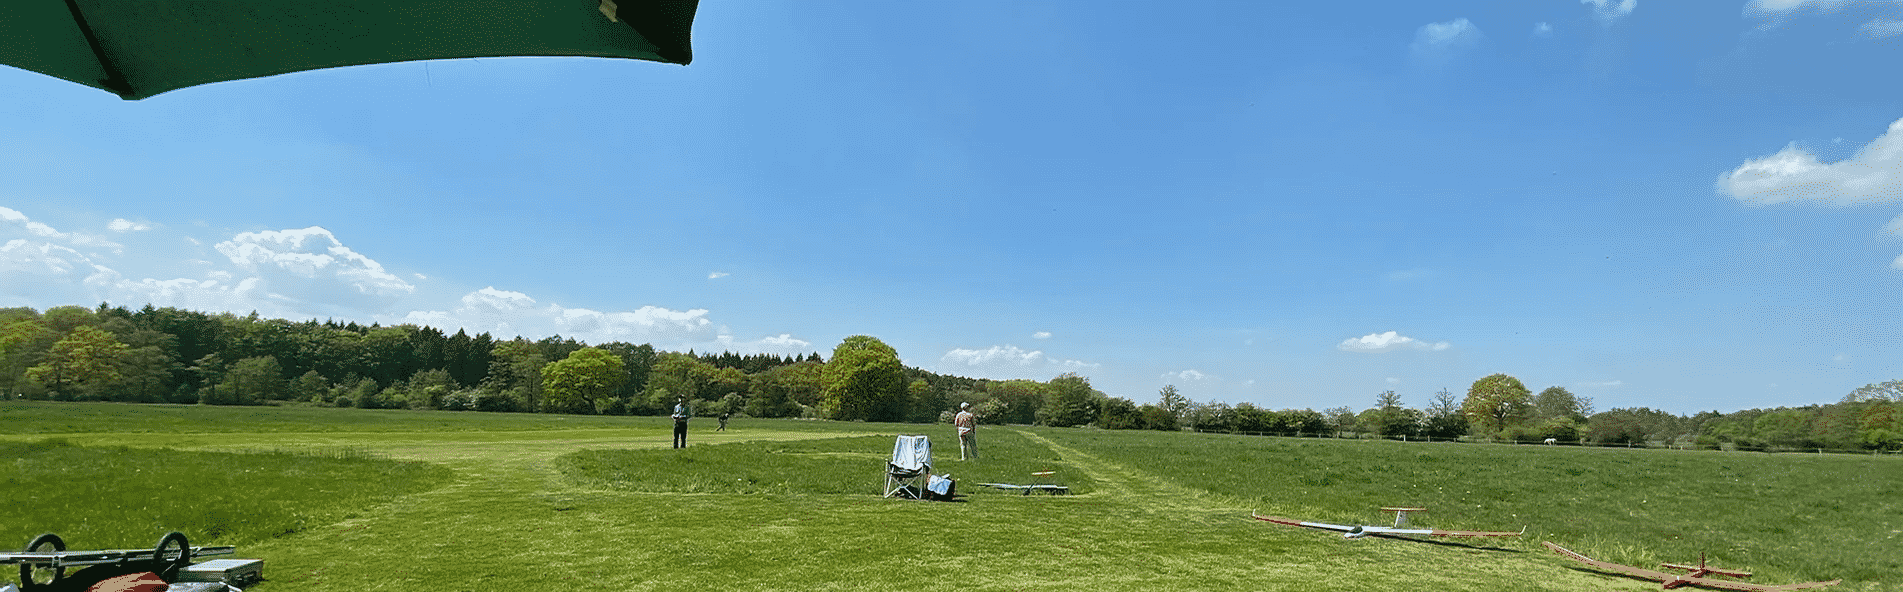 Luftsportgruppe Rissen ferngesteuerter Modellflug Segelfliegen in der Thermik